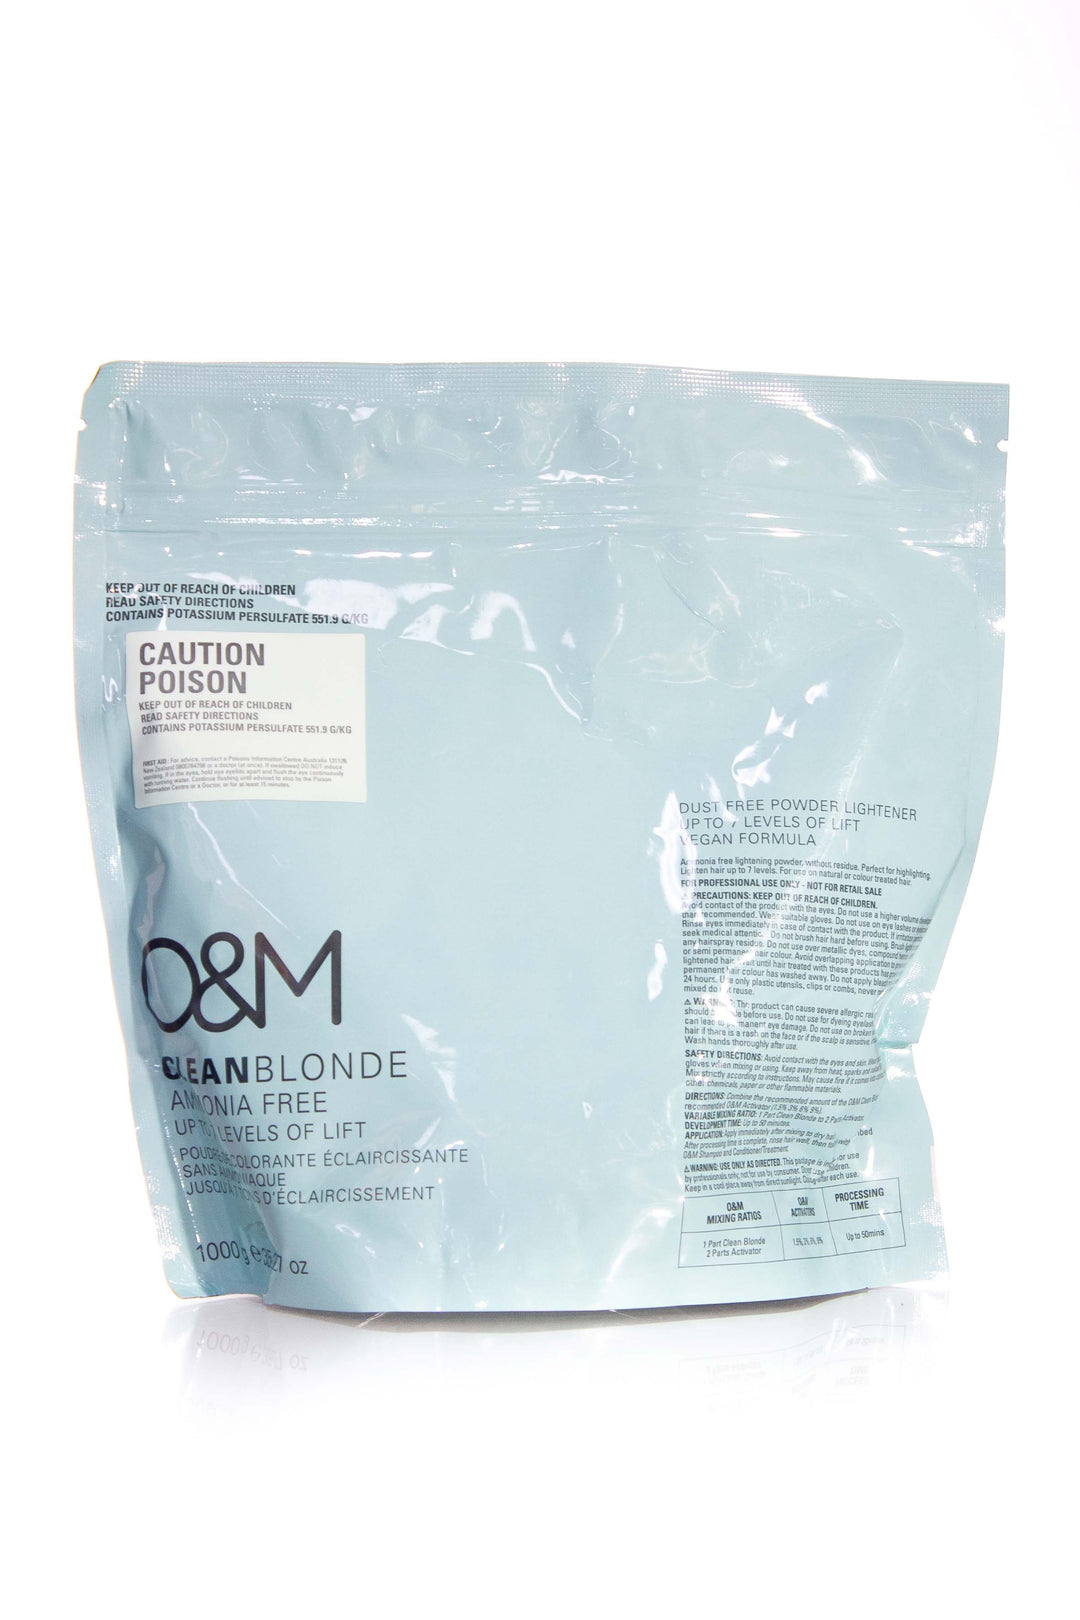 O&M CLEAN BLONDE Ammonia Free Powder Lightener | Various Sizes